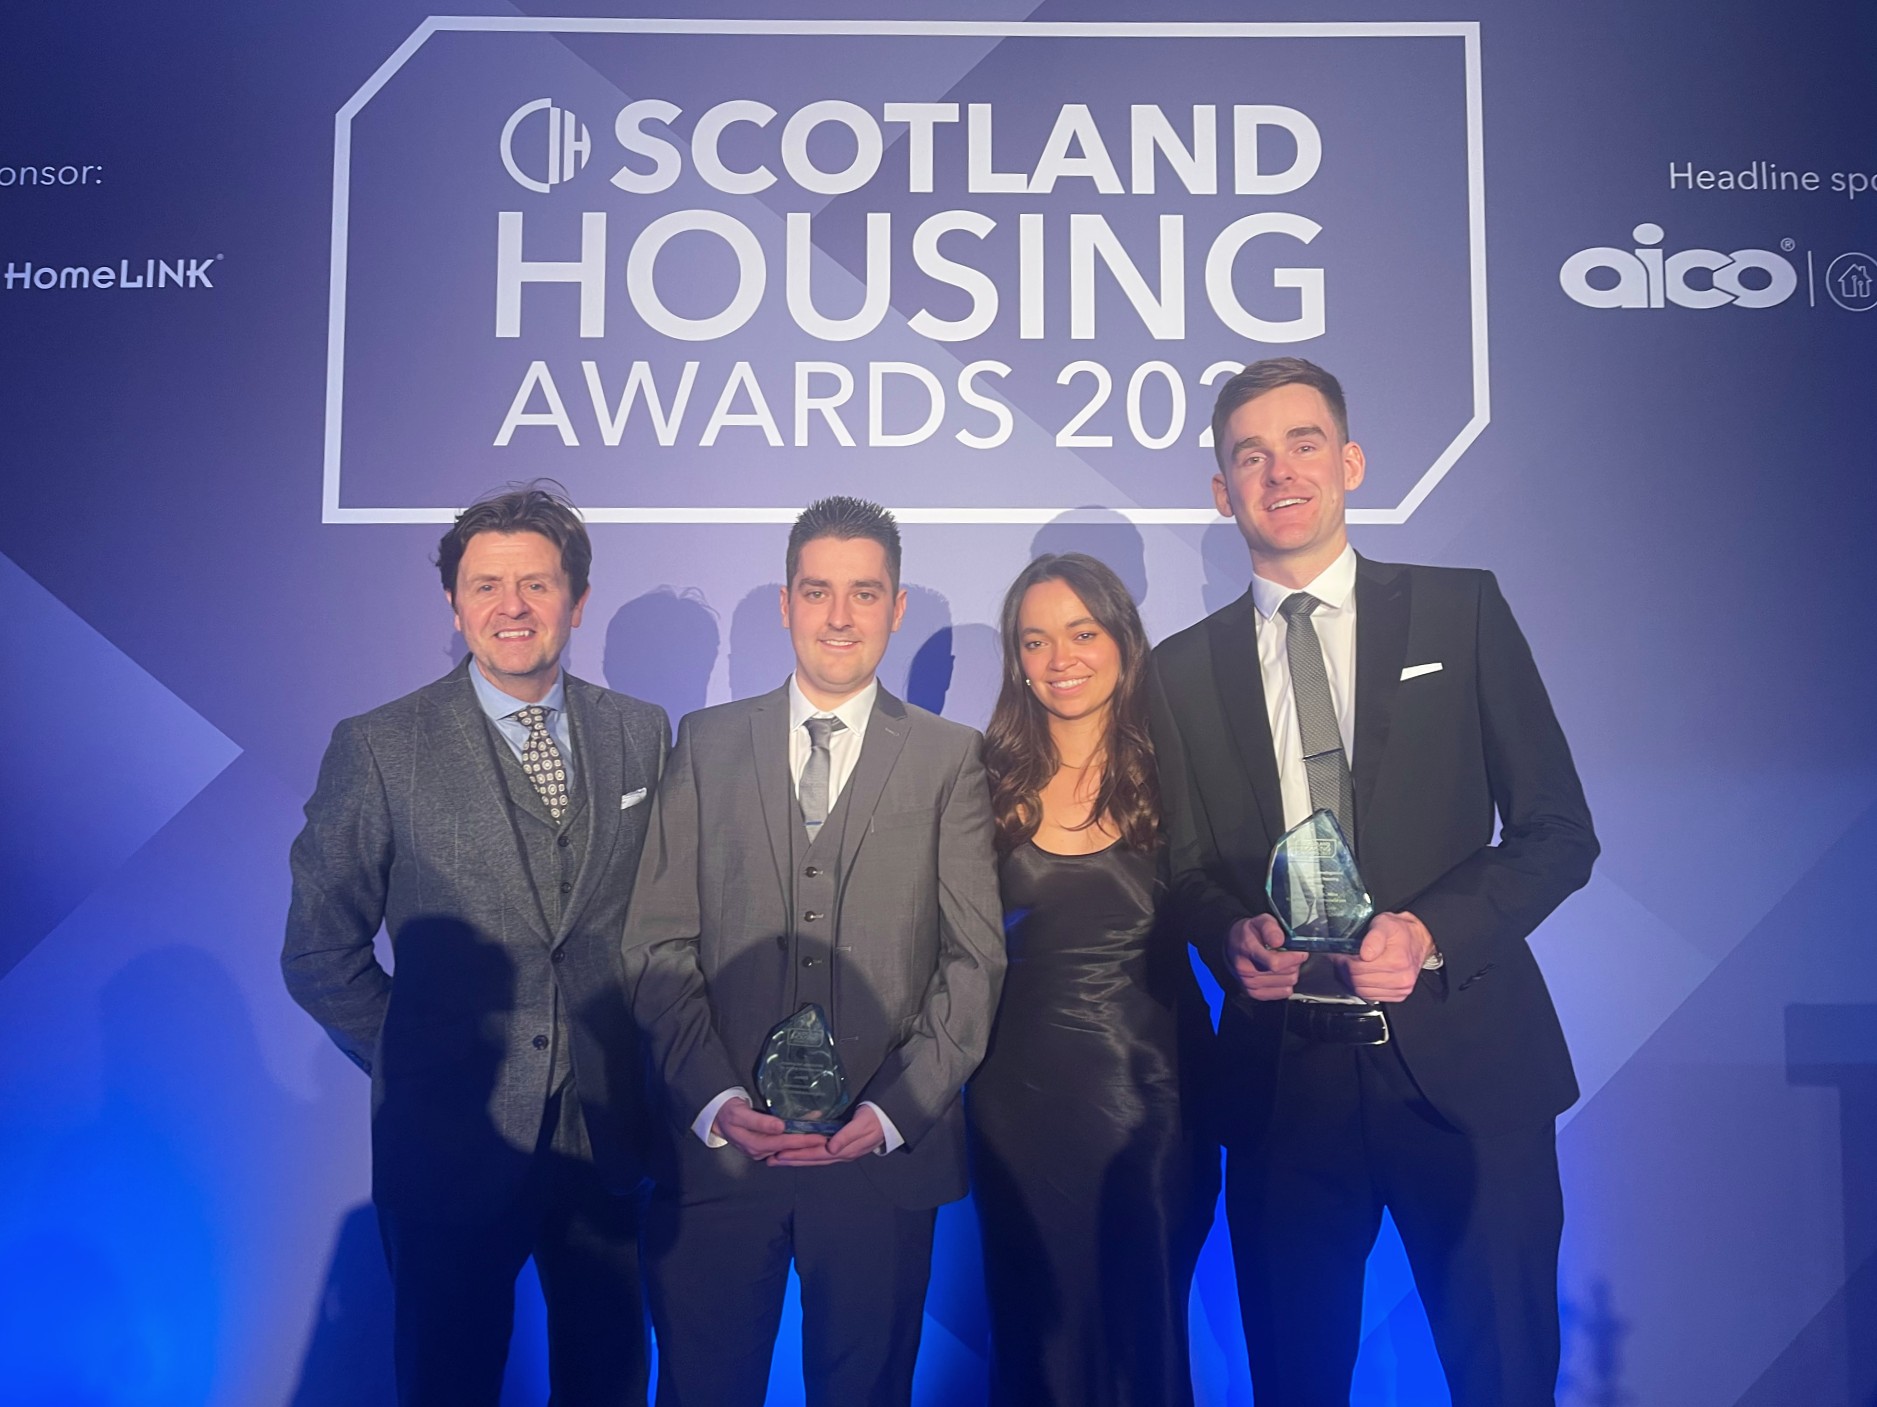 Kingdom celebrates double win at CIH Scotland Housing Awards